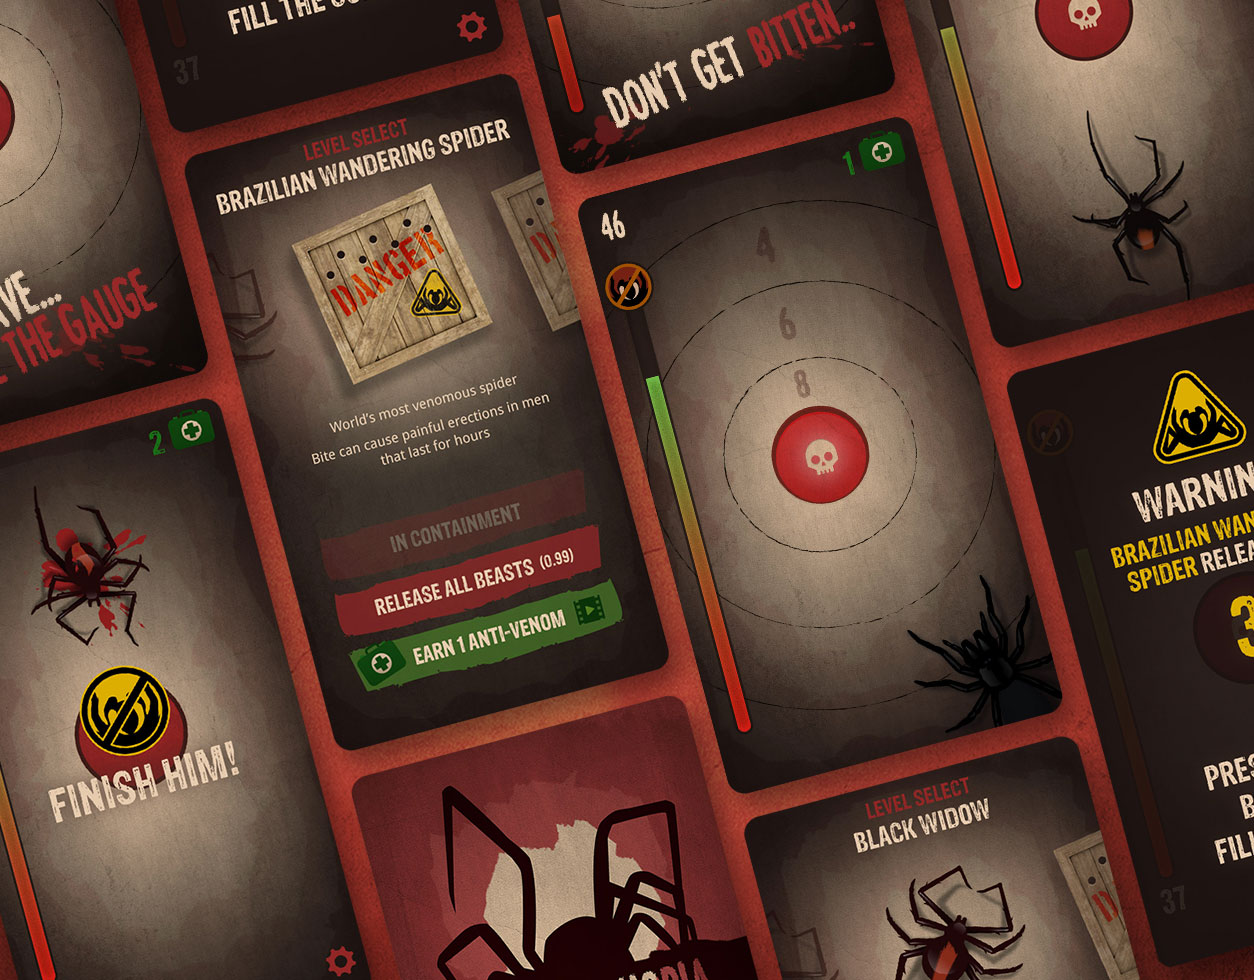 Arachnophobia mobile app screenshots